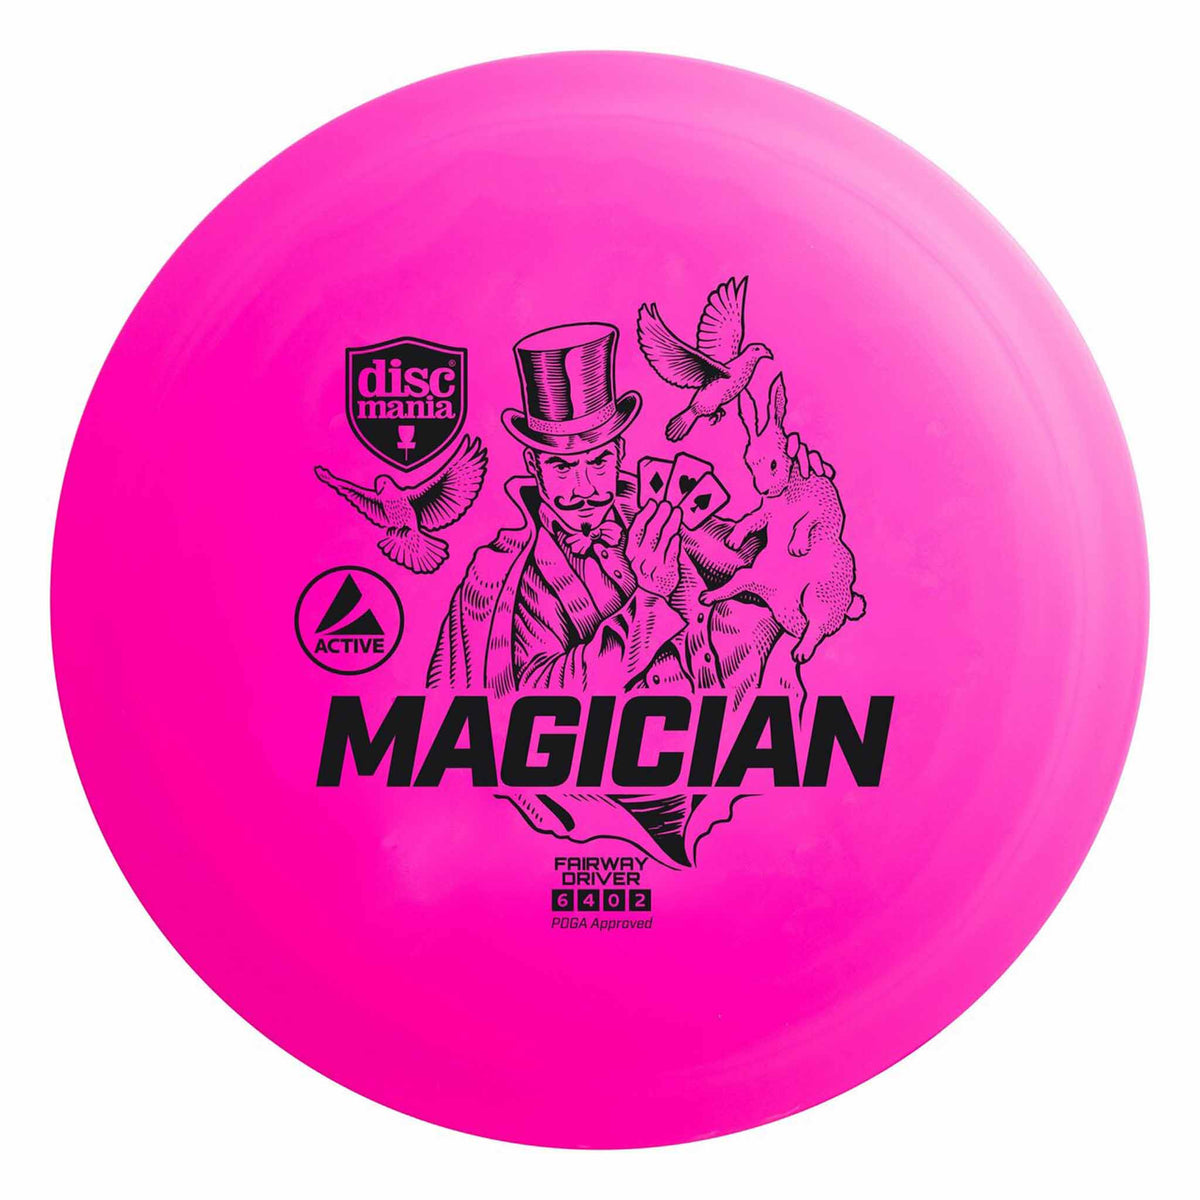 Discmania Active Magician fairway driver - Pink